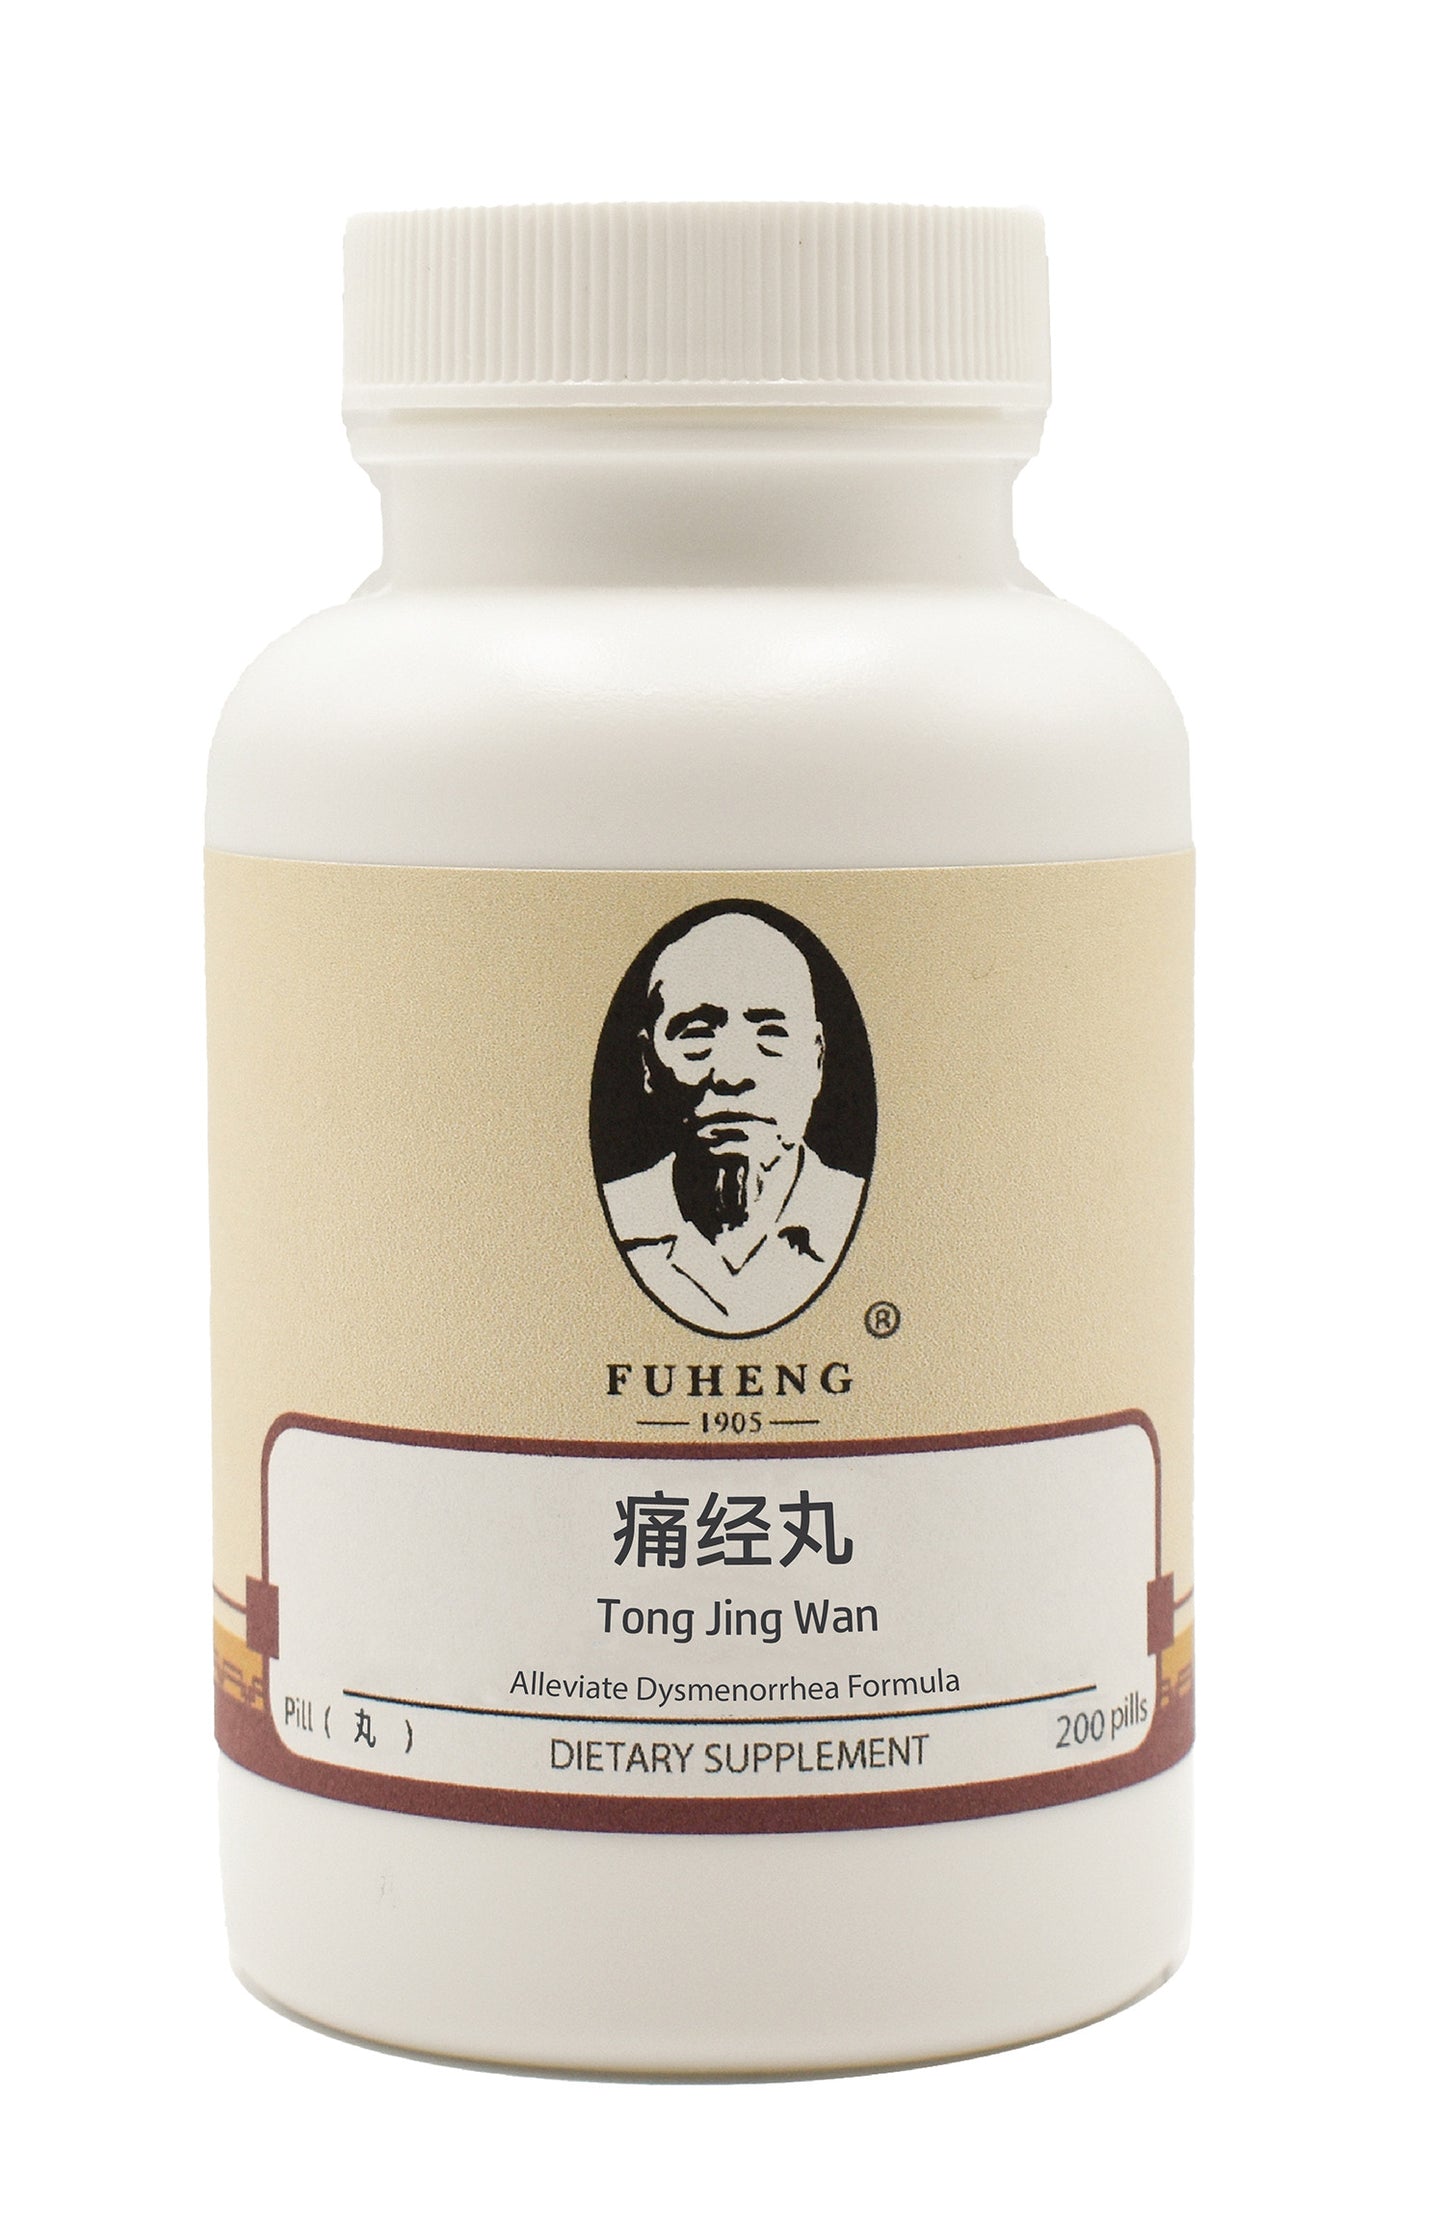 Tong Jing Wan - 痛经丸 - 丸剂 - Alleviate Dysmenorrhea Formula - FUHENG福恒 - Since 1905 - 200 pills